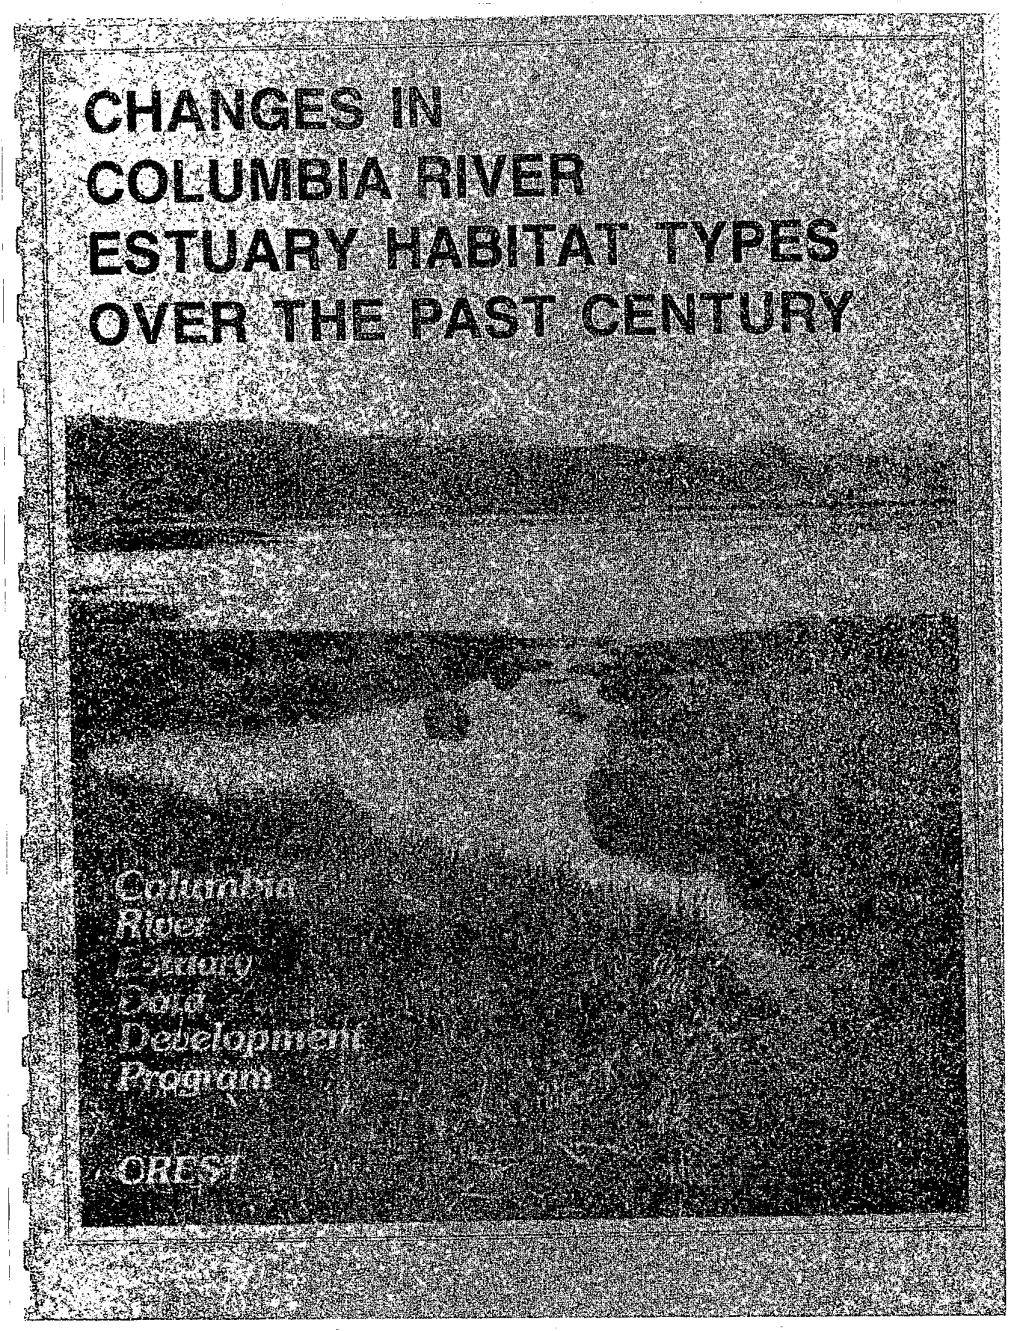 Changes in Columbia River Estuary Habitat Types Over the Past Century